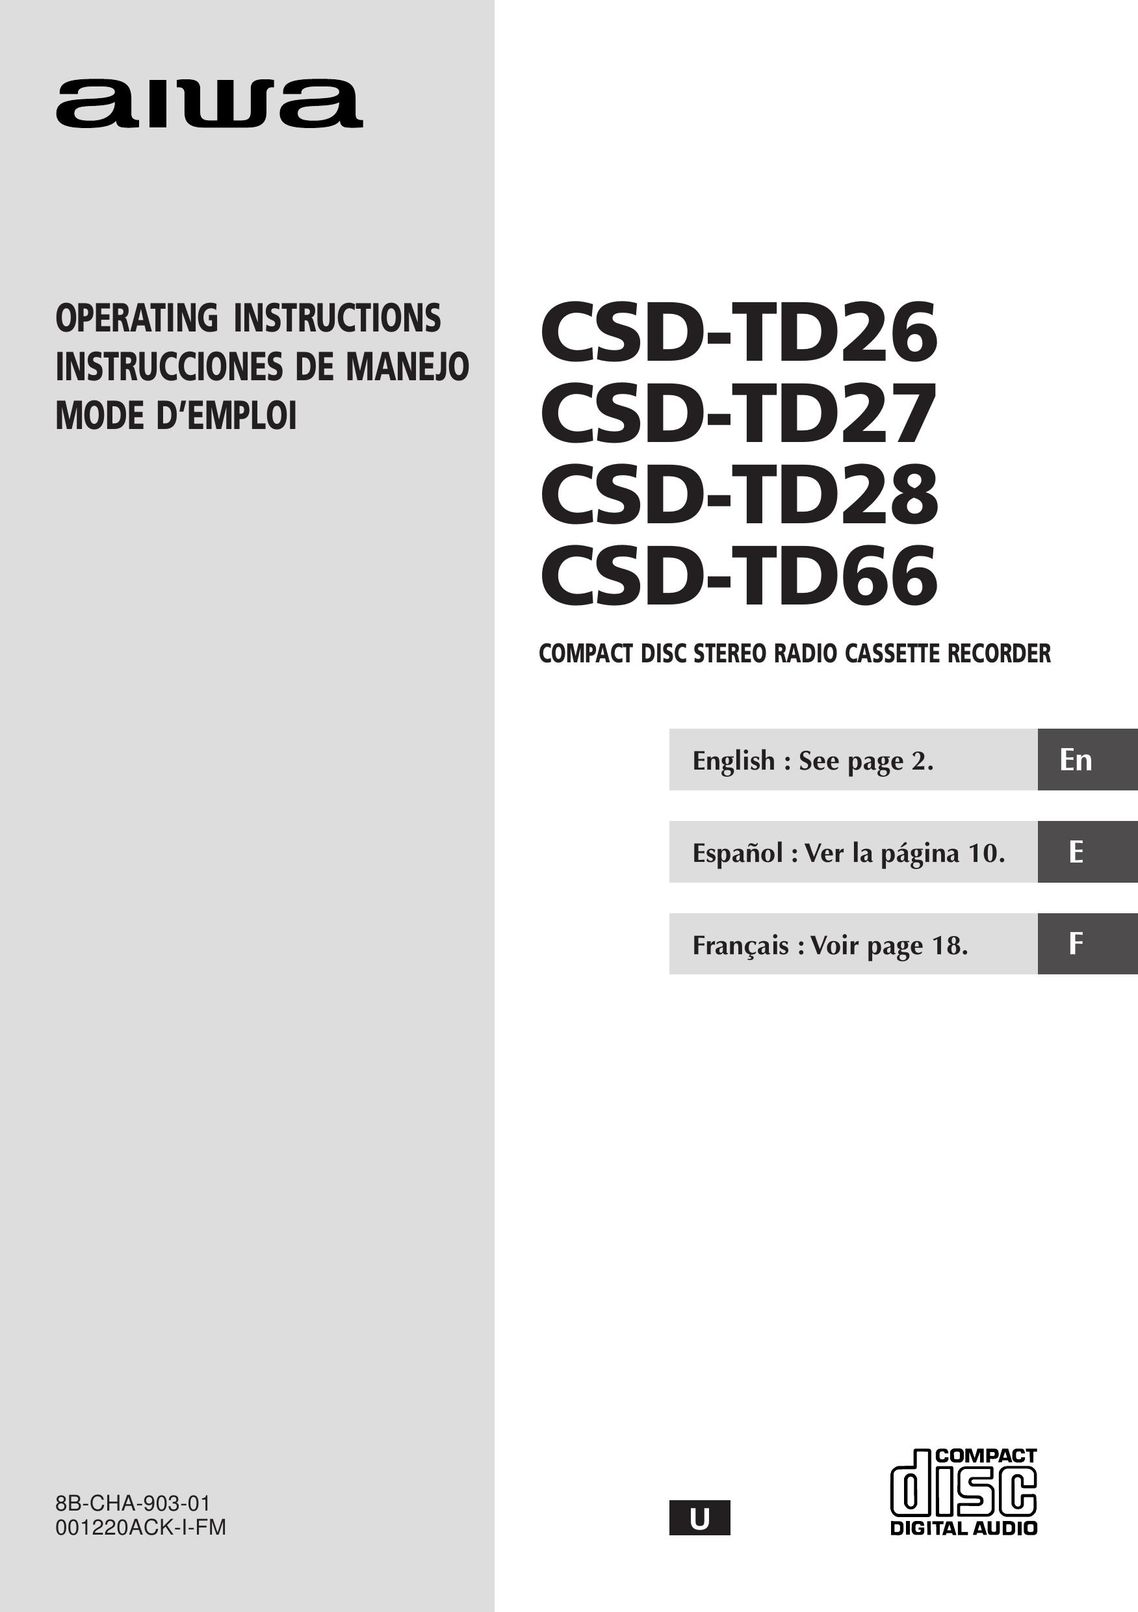 Aiwa CSD-TD28 CD Player User Manual